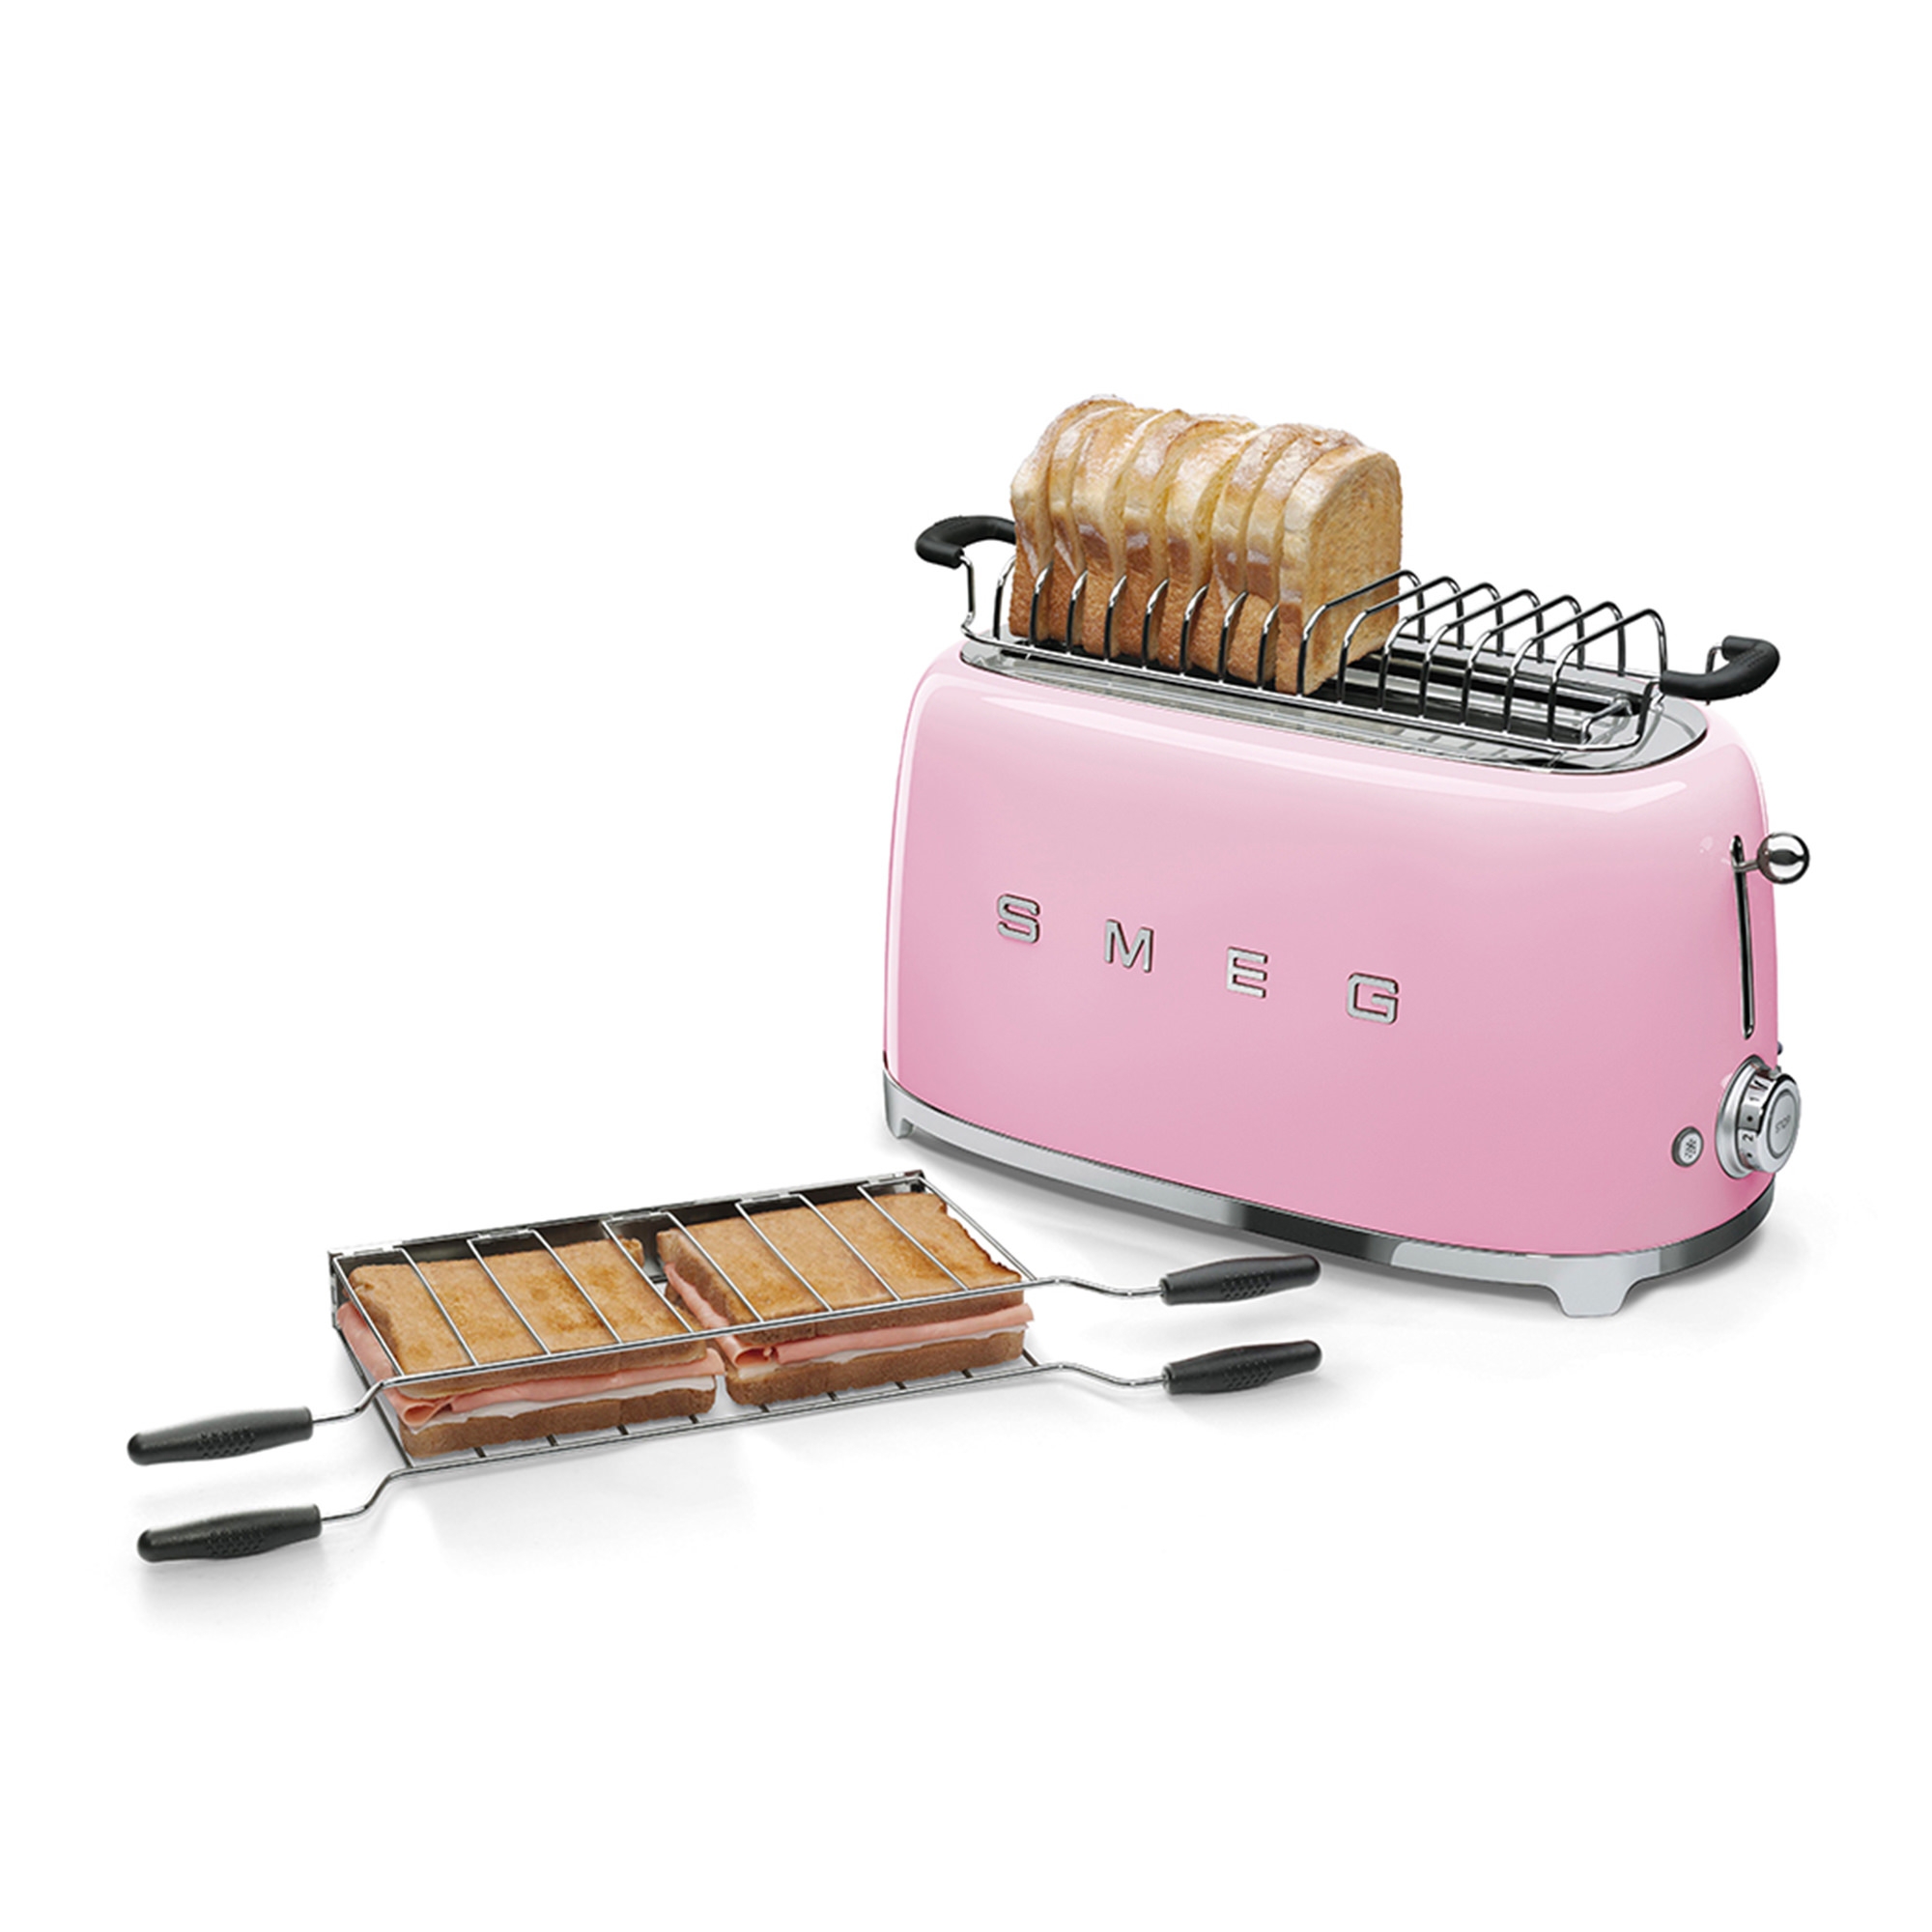 Smeg 50's Retro Style 4 Slice Toaster Pastel Pink Image 2